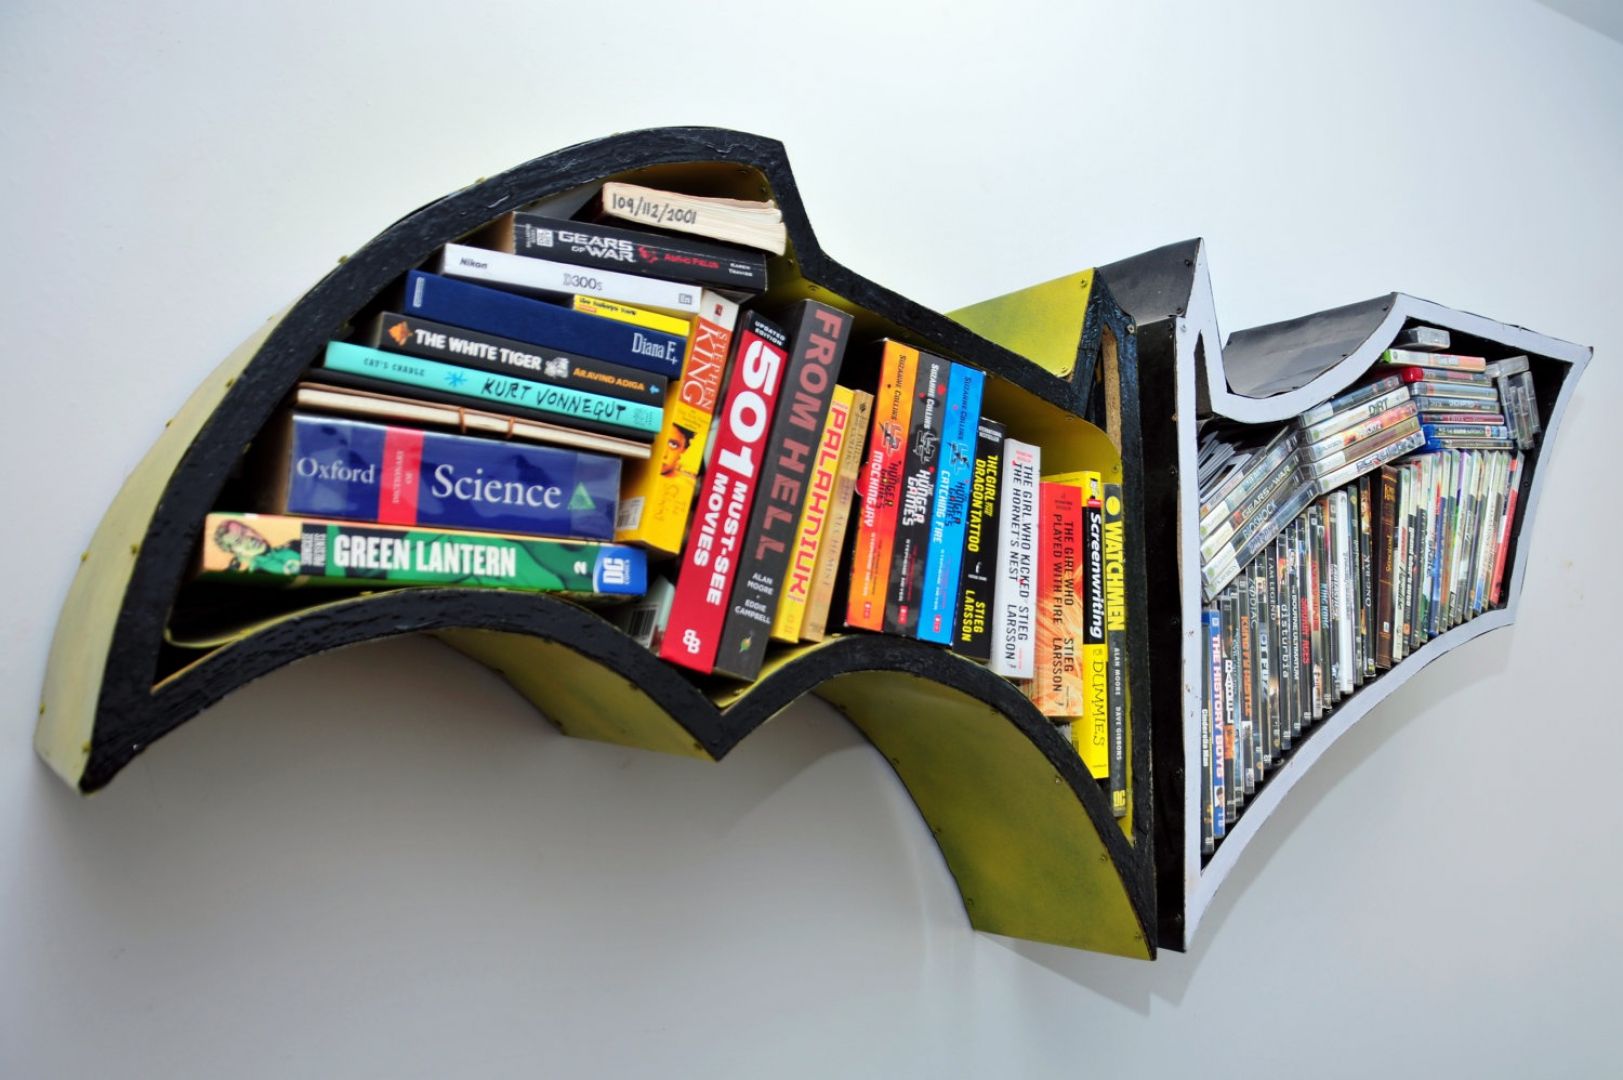 Batman-Bookshelf
Fot. Fiction Furniture